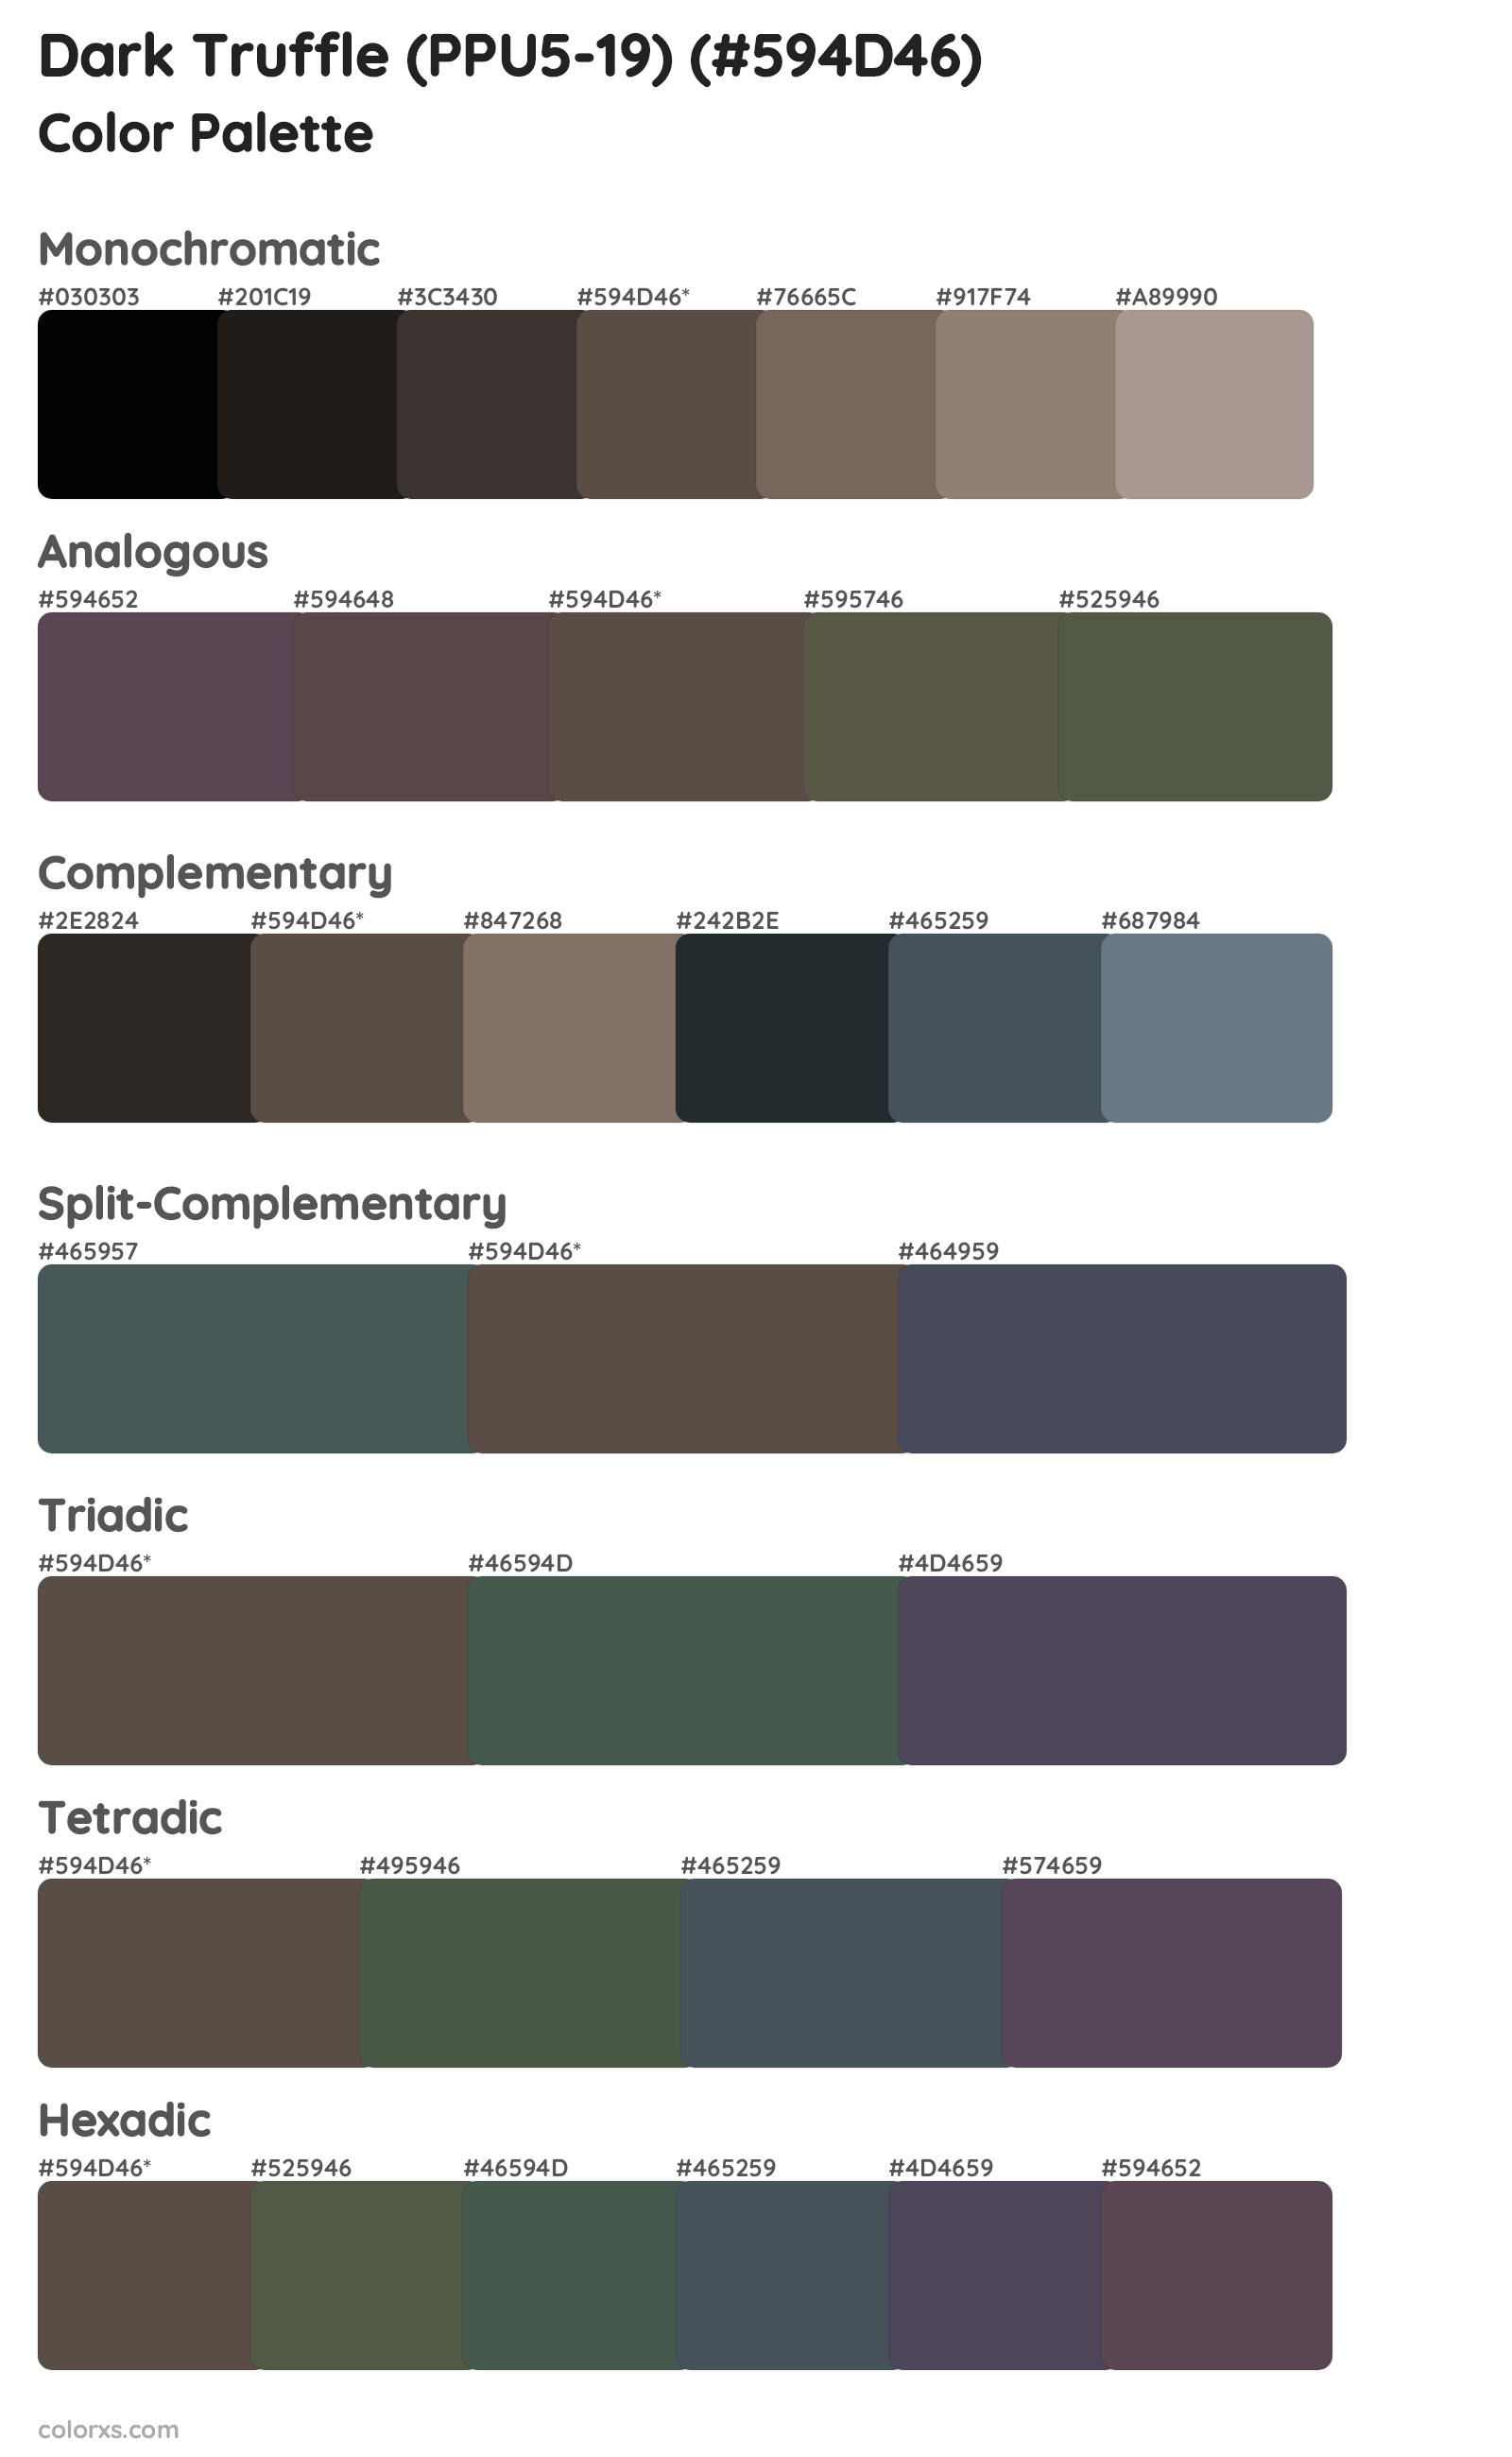 Dark Truffle (PPU5-19) Color Scheme Palettes